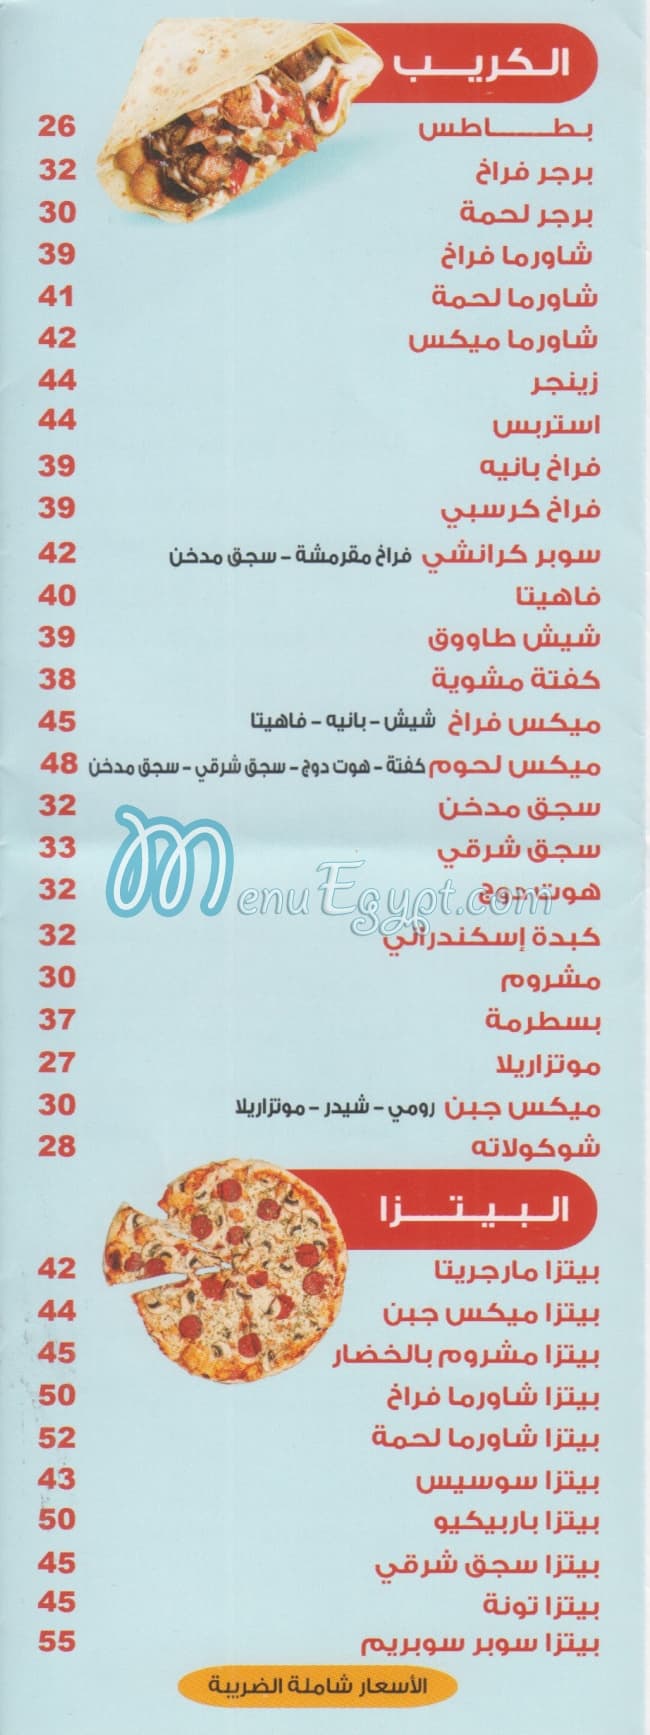 Shawrma Abu MazenTalat Harb Street delivery menu